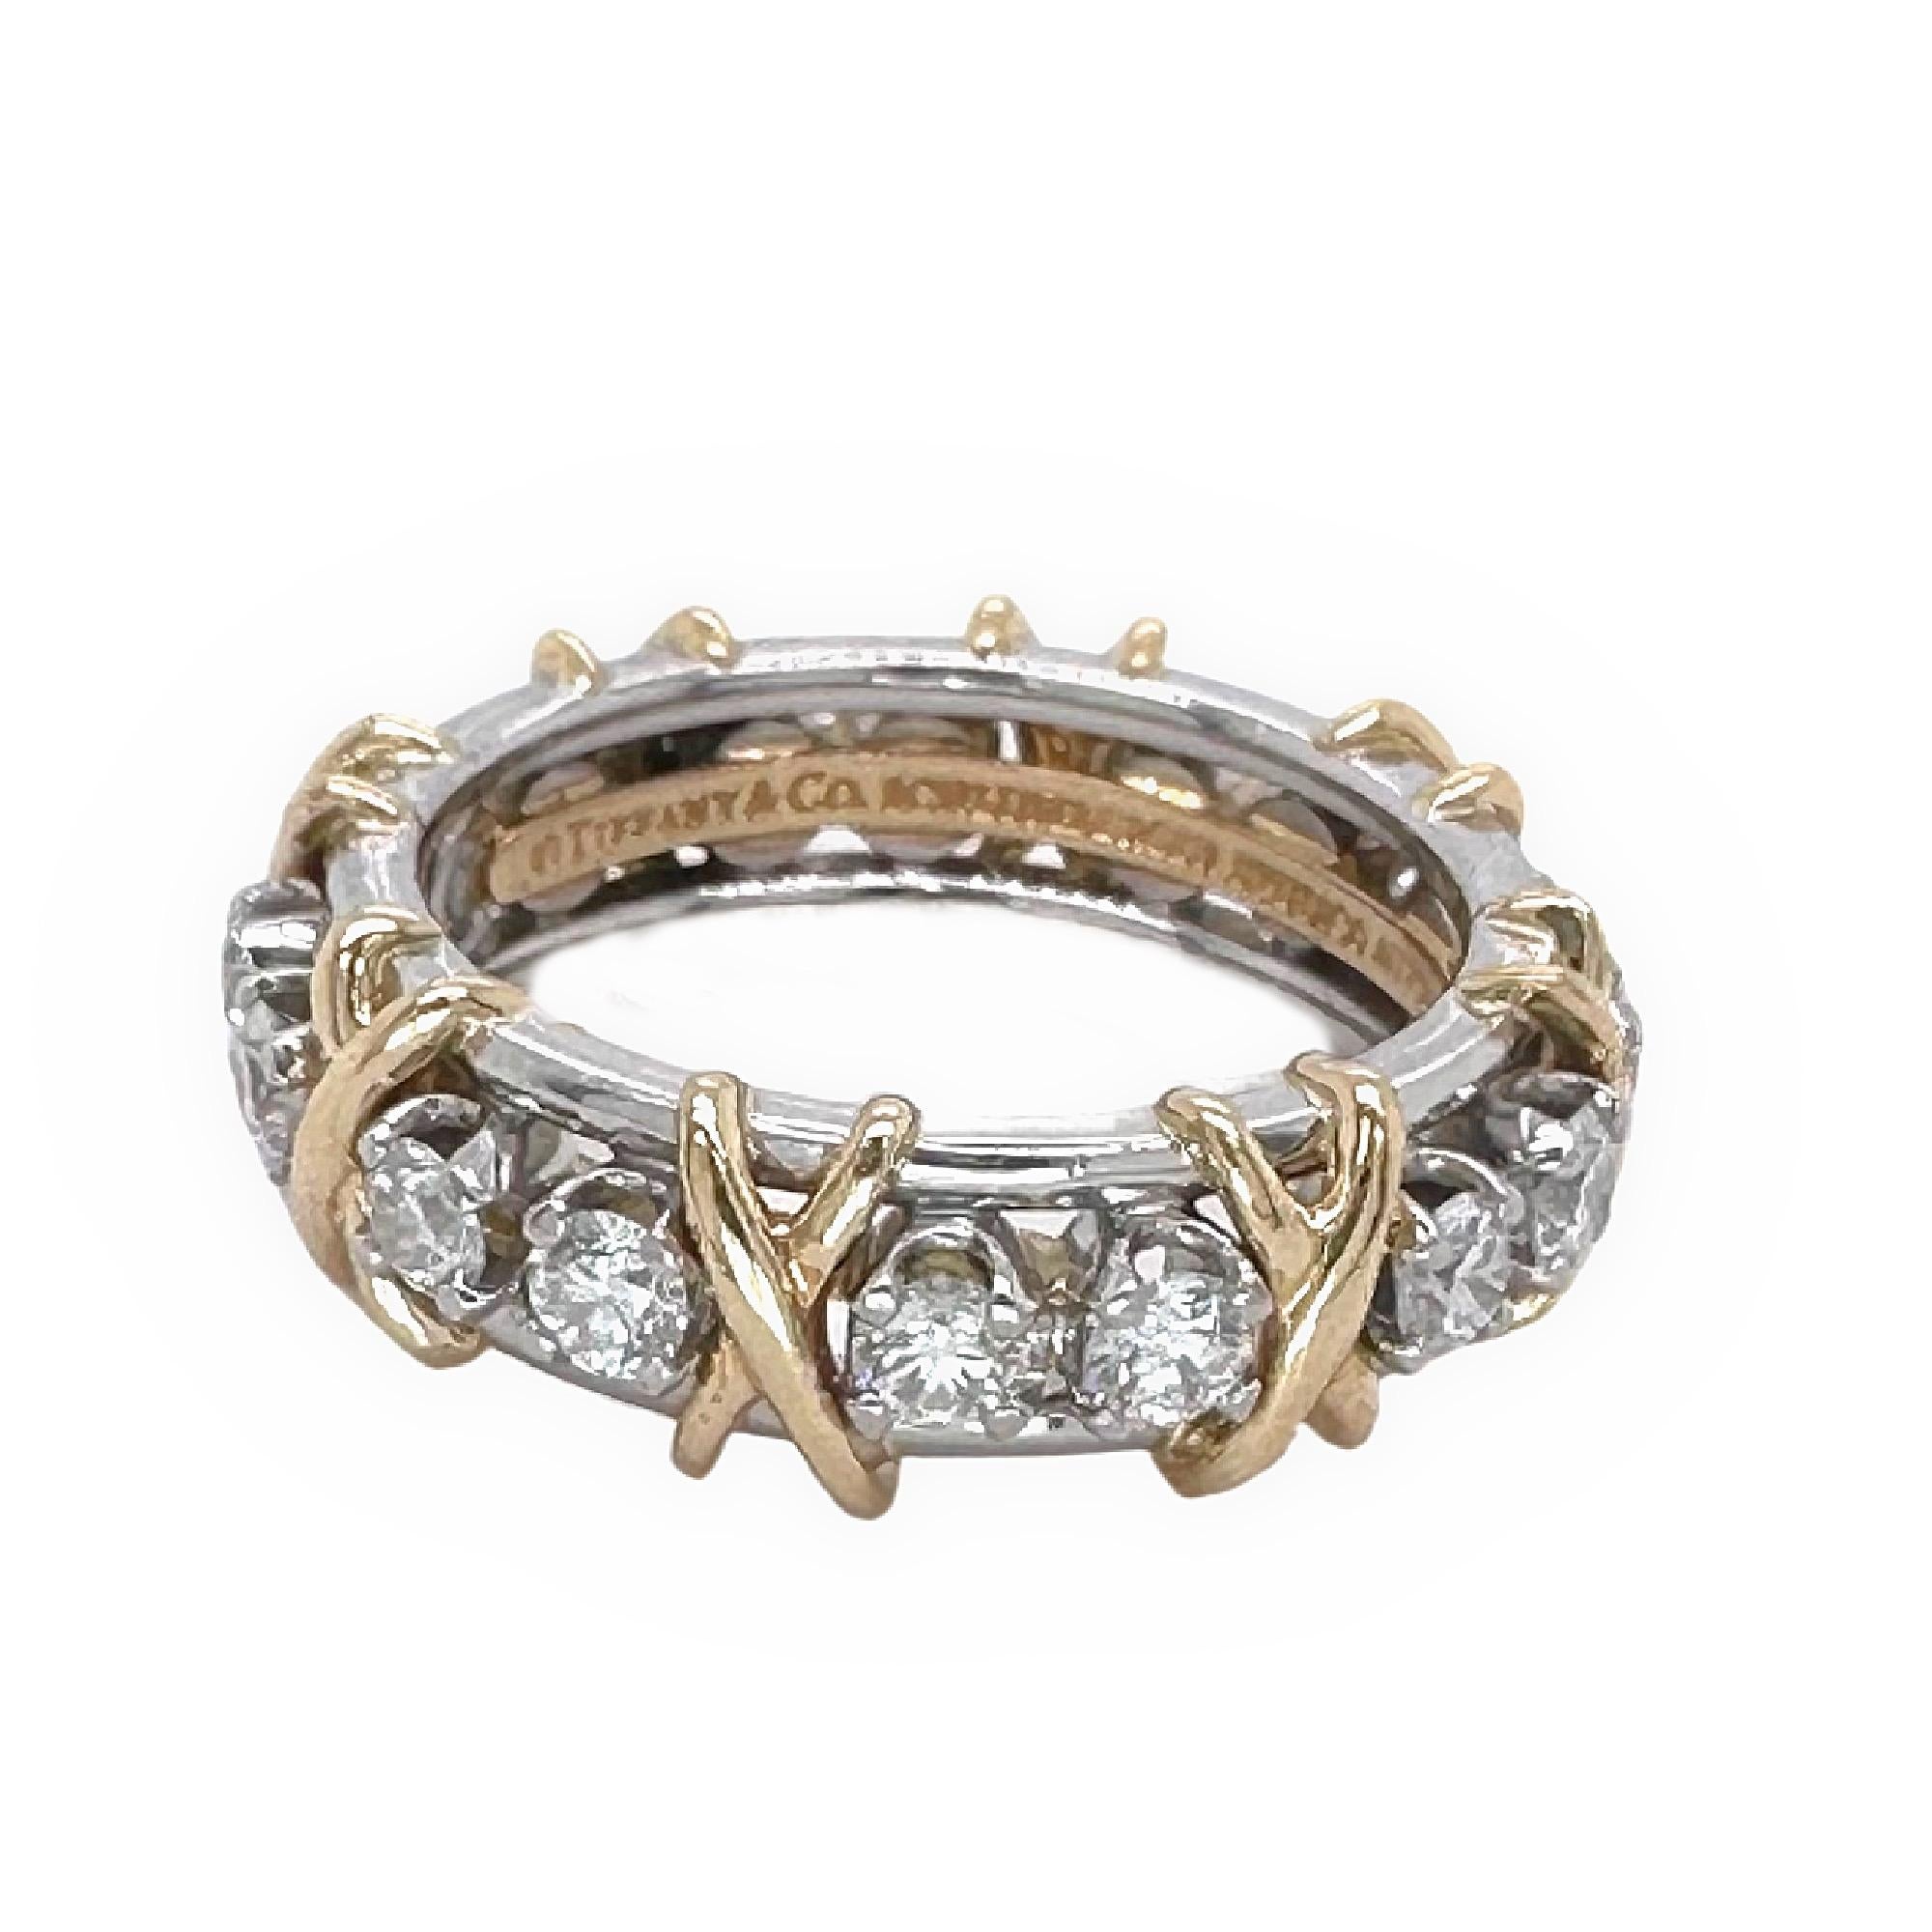 Tiffany & Co Schlumberger Sixteen Stone Diamond Band Ring Platinum and 18k Gold 1